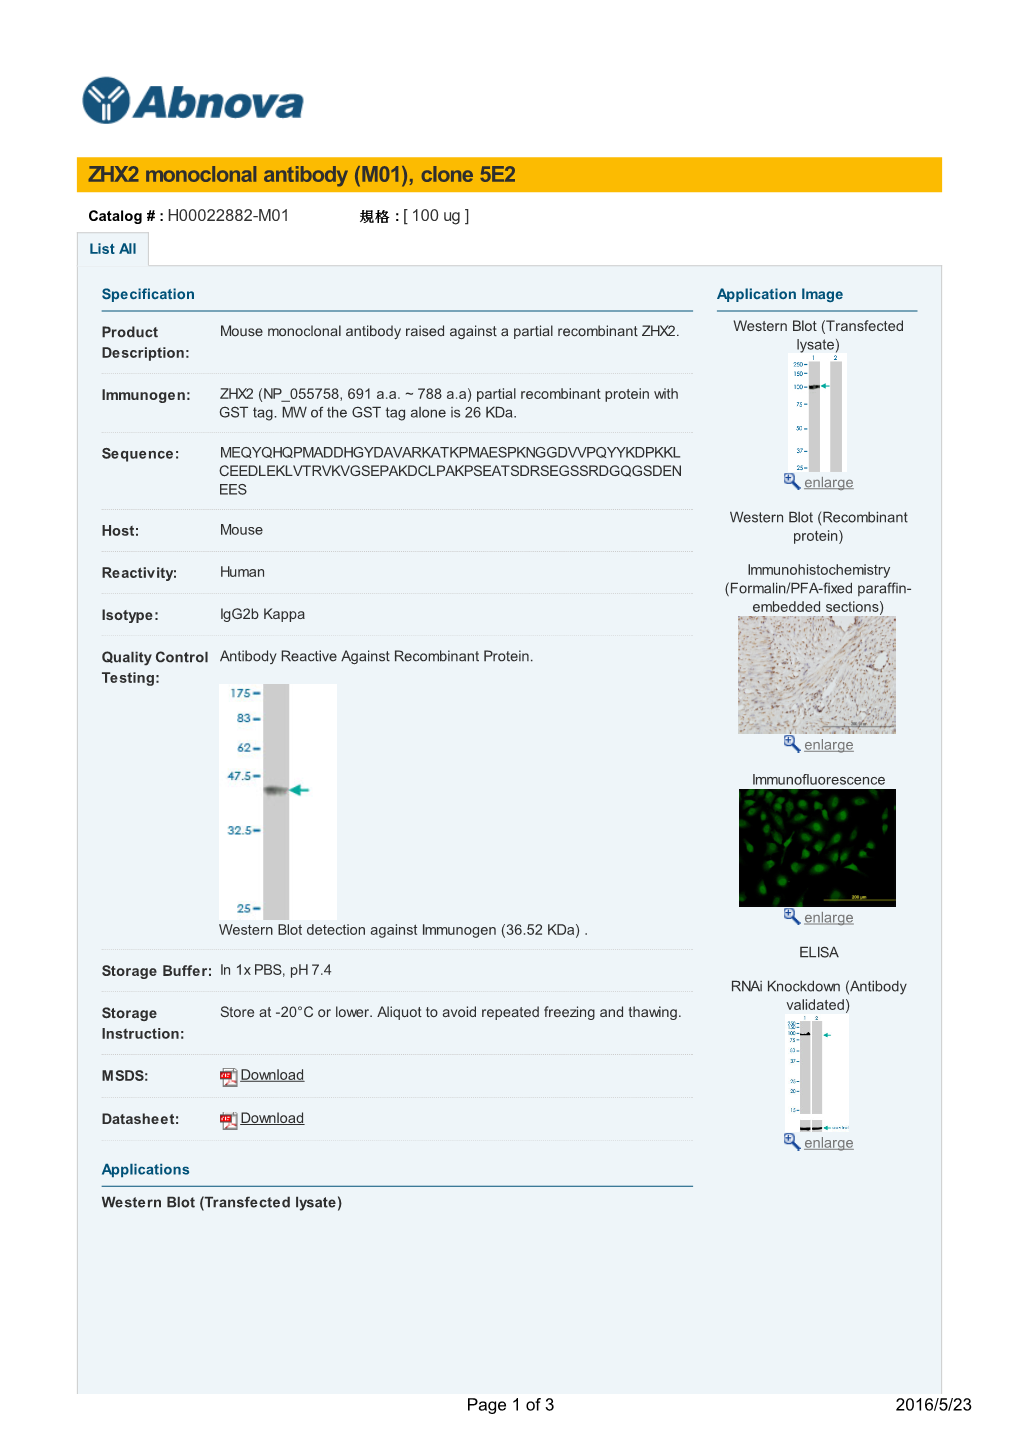 ZHX2 Monoclonal Antibody (M01), Clone 5E2